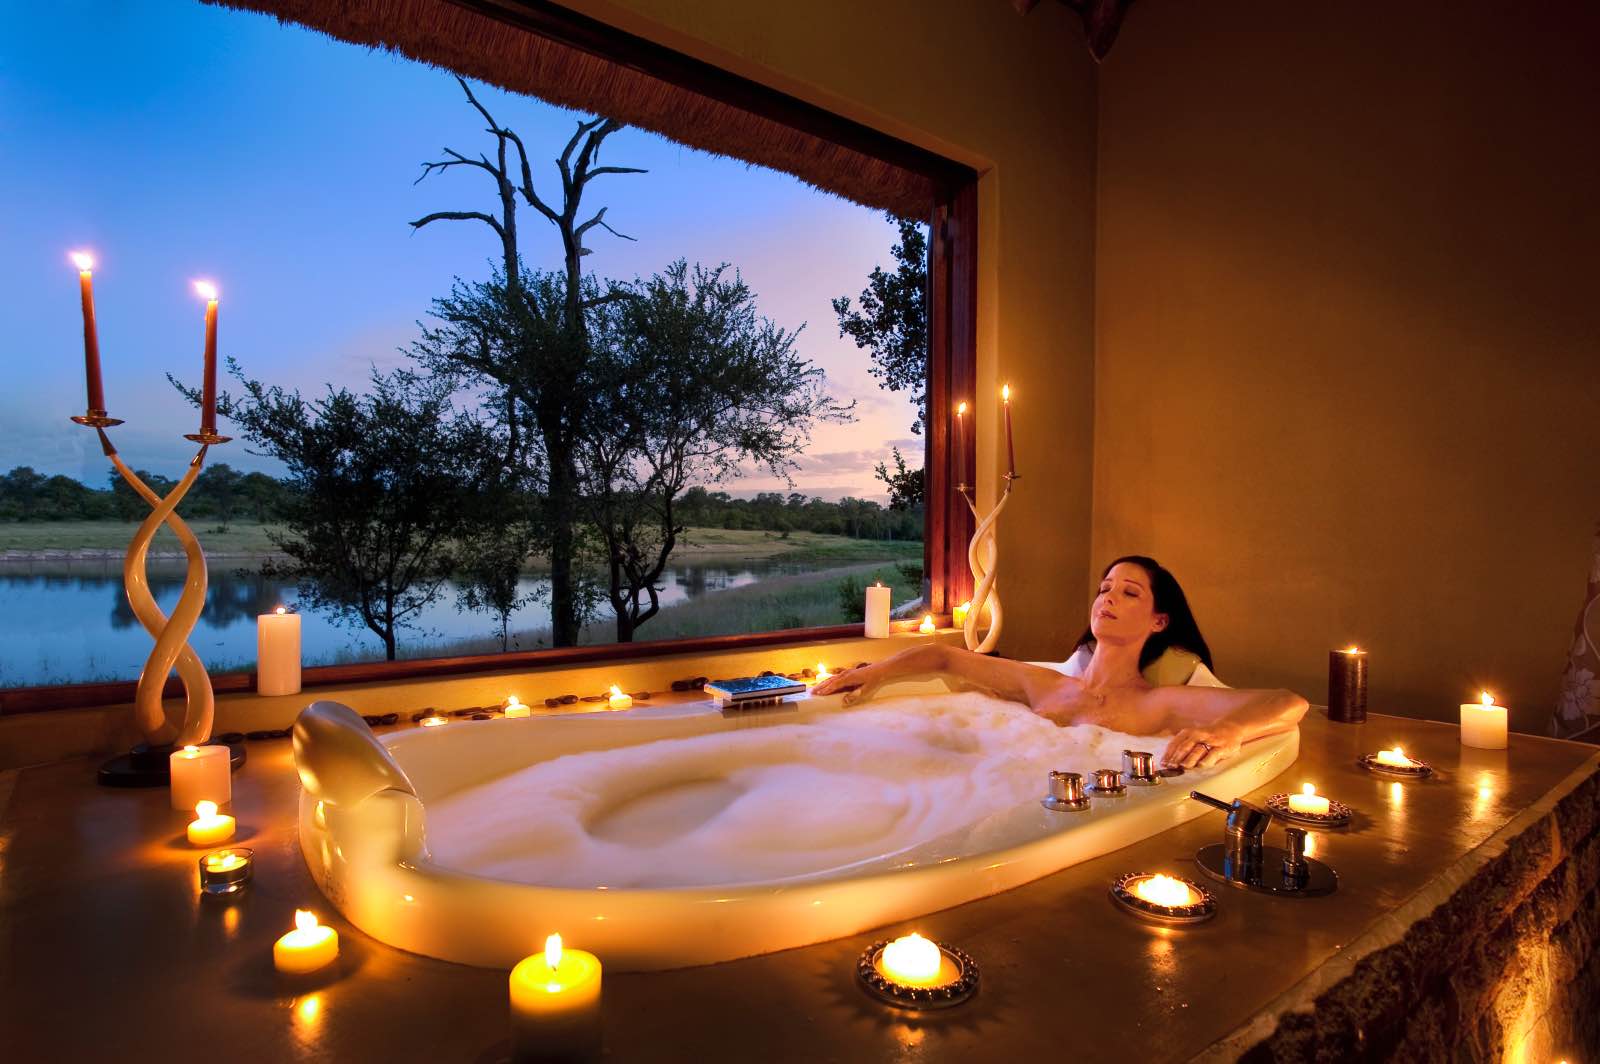 Candlelit bath with a view of the waterhole at Arathusa Safari Lodge spa